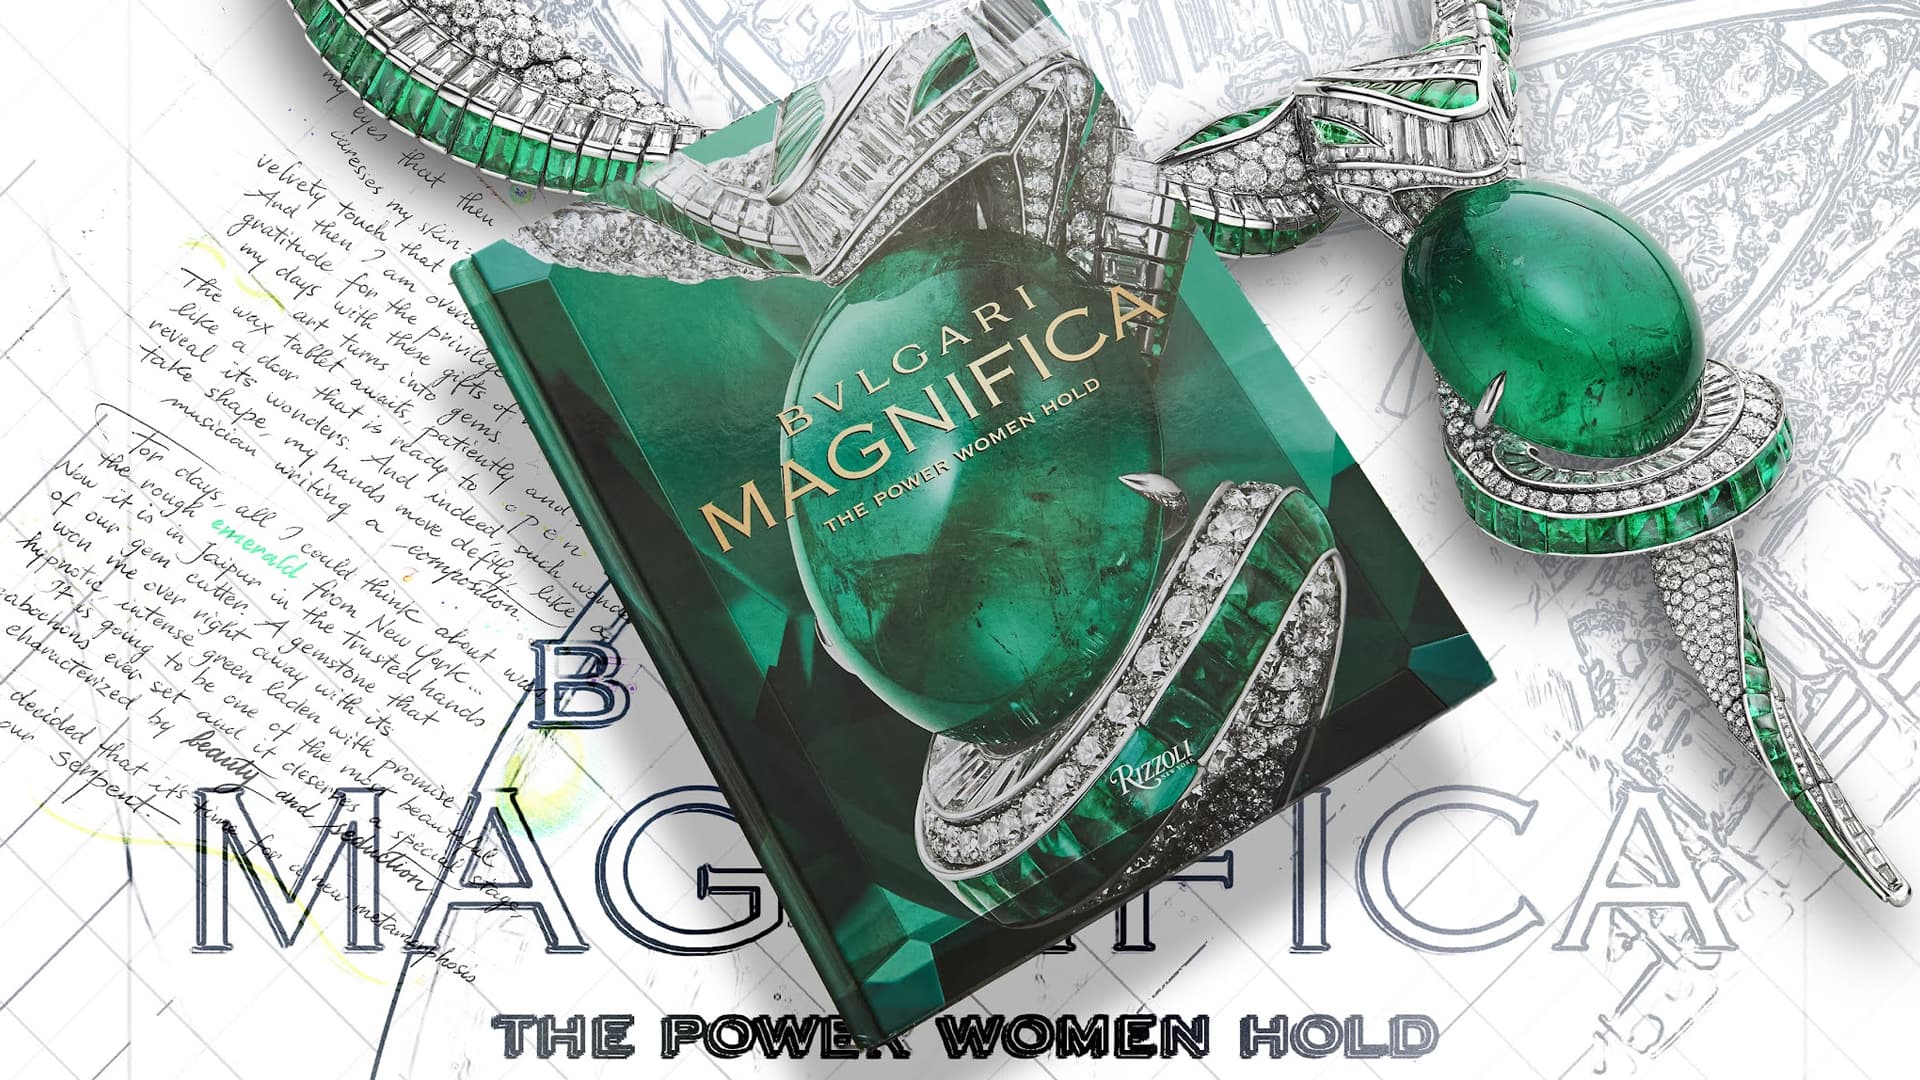 Bvlgari Magnifica: The Power Women Hold